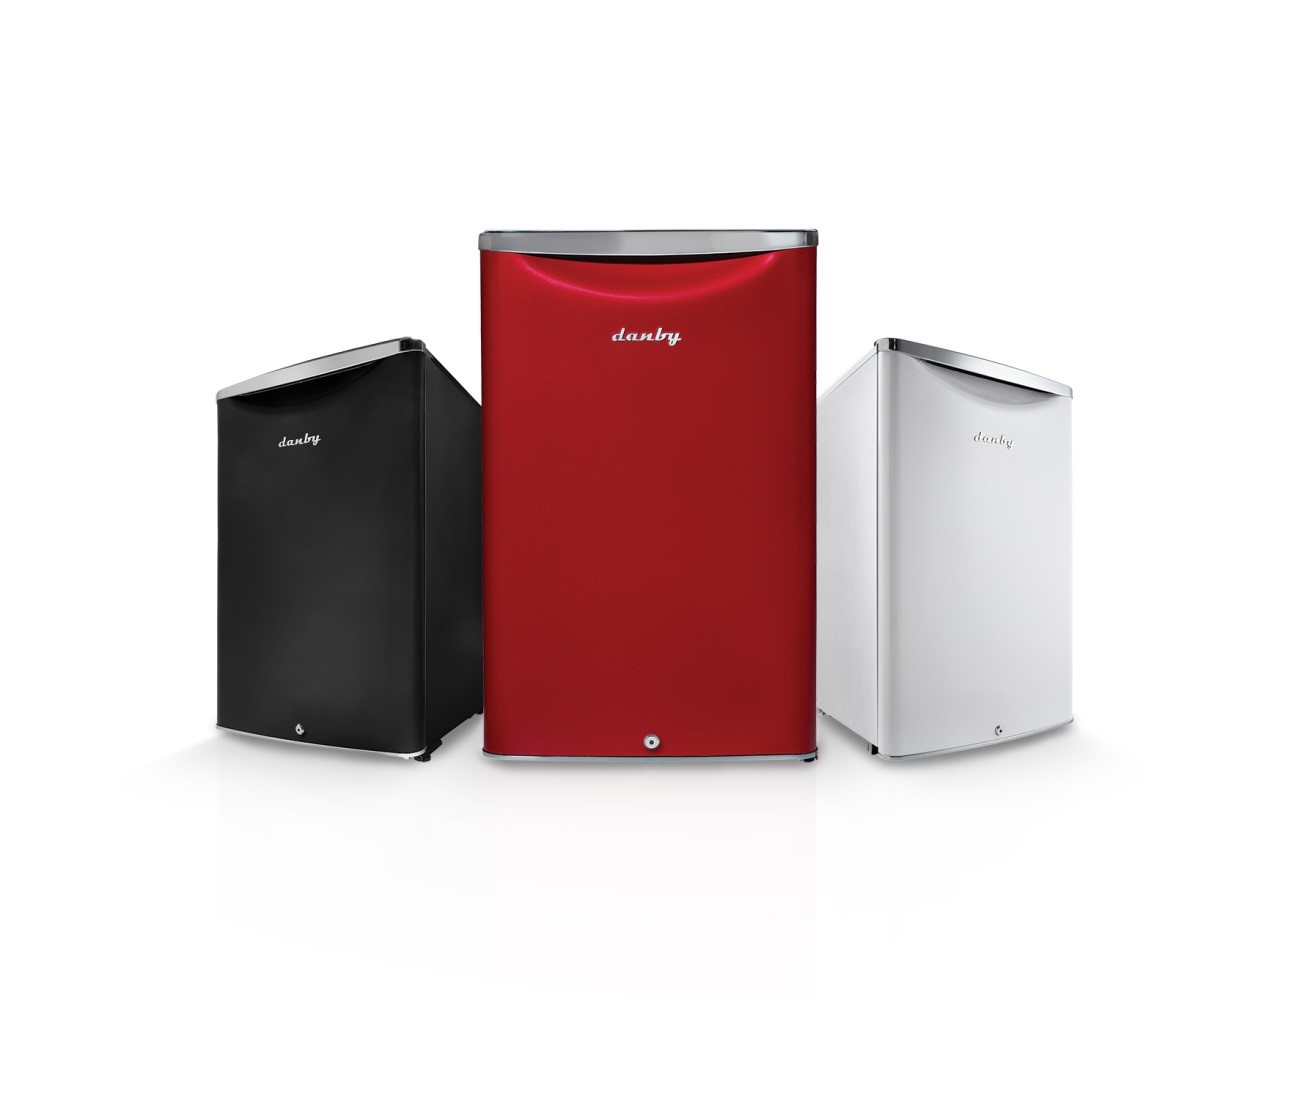 Danby Contemporary Classic line of compact refrigerators